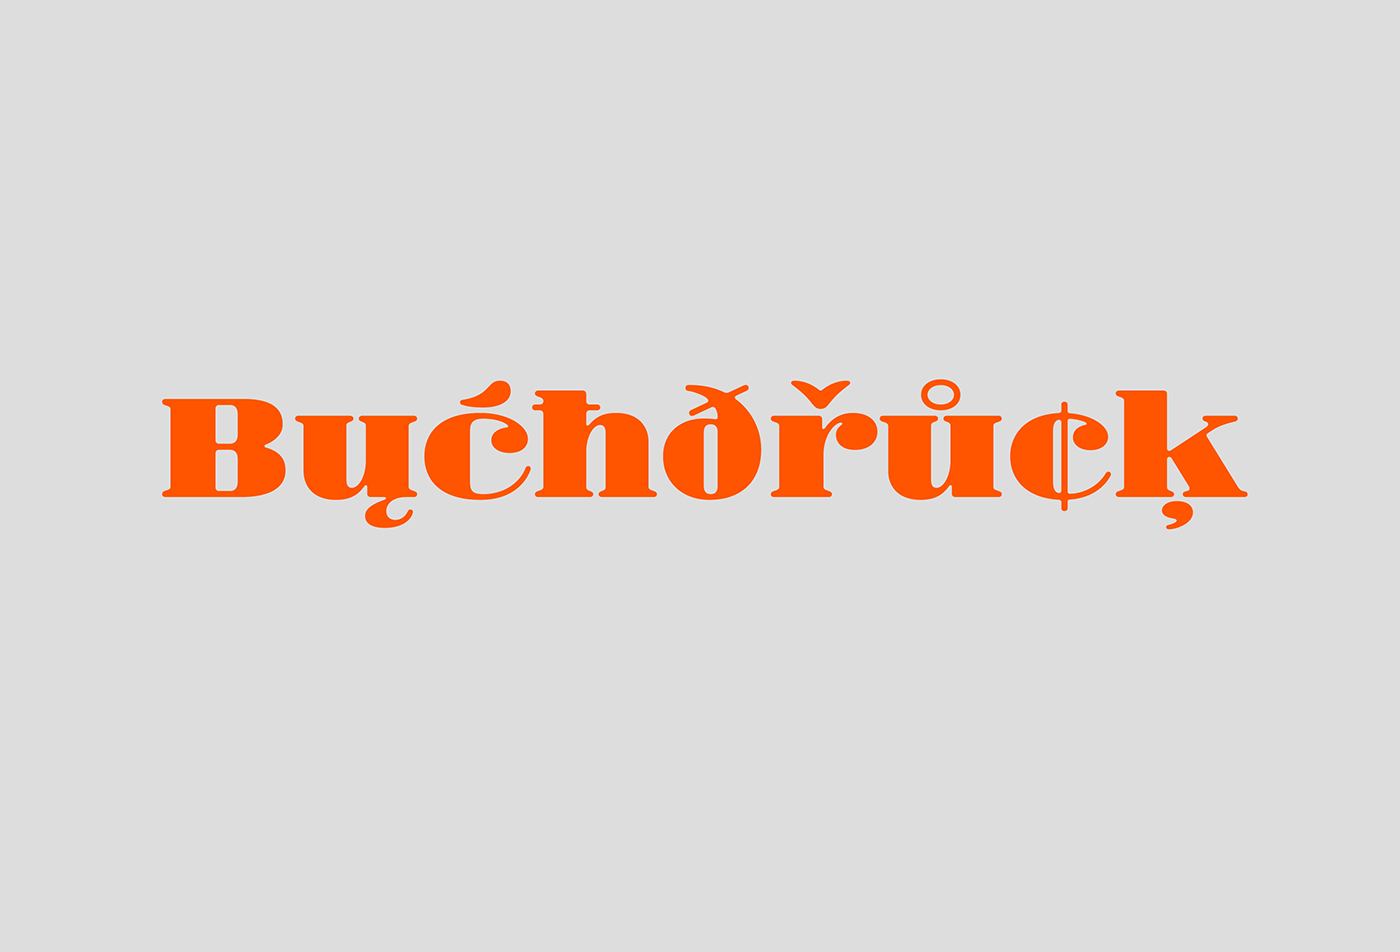 typography   Typeface font Kozma Lajos kner hungary serif sansless budapest fat